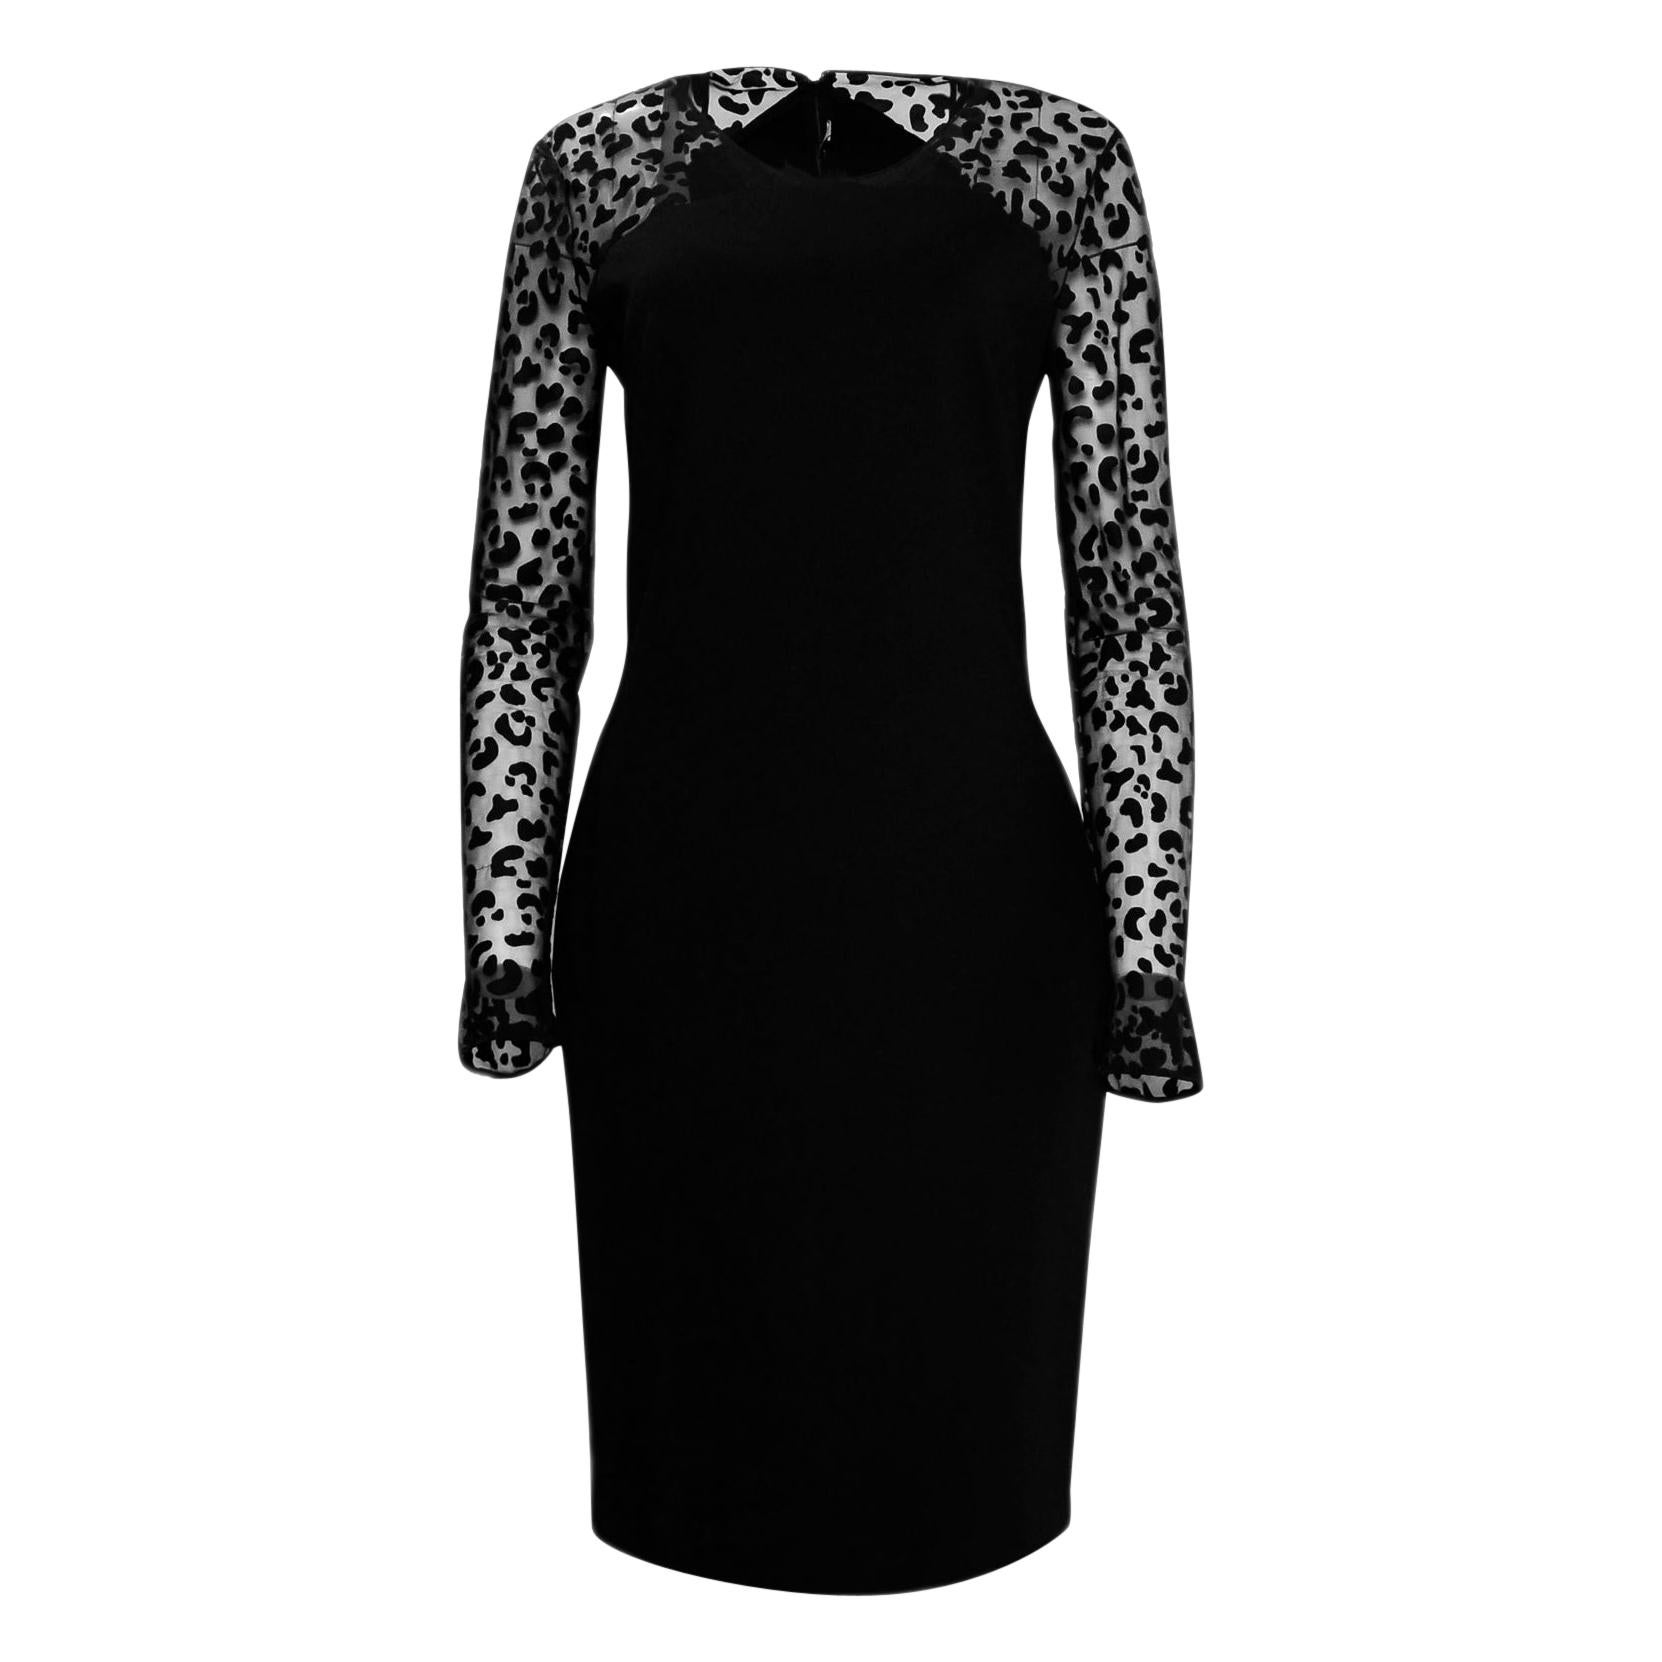 Stella McCartney Black Leopard Chiffon Sleeve Dress sz 48